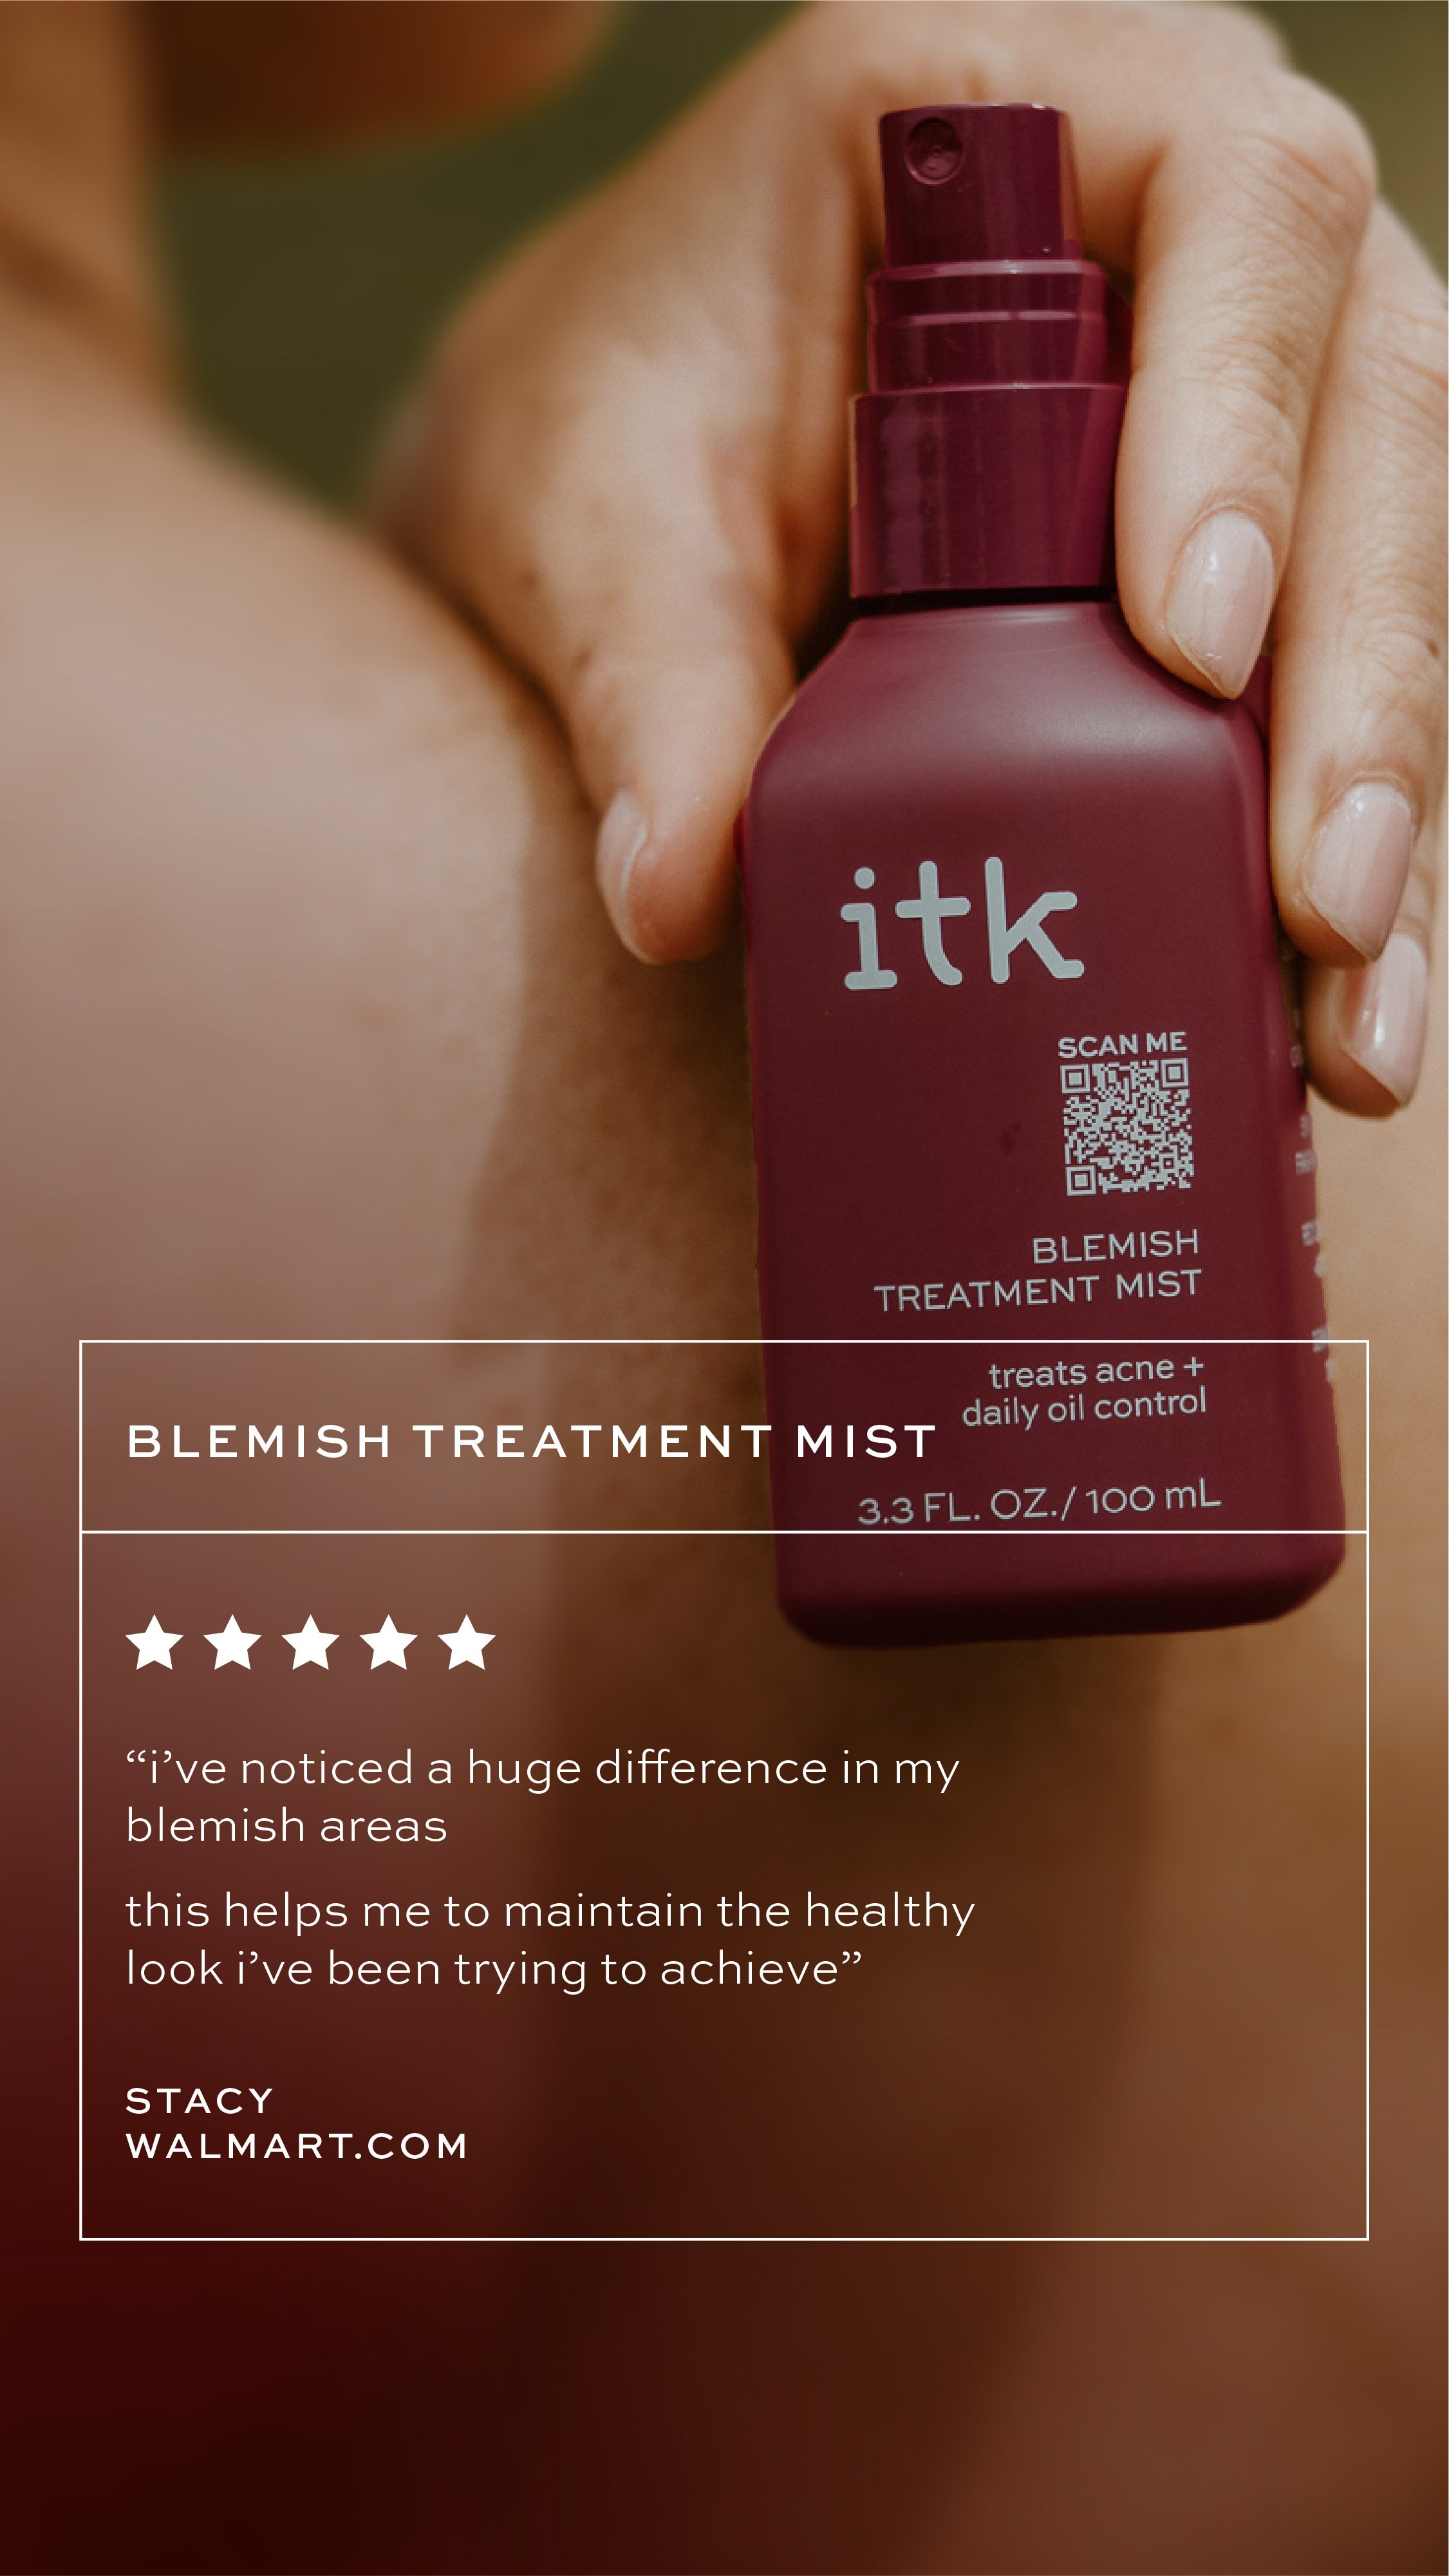 09_ITK_Social_Review-Template_Blemish-Treatment-Mist-01.jpg